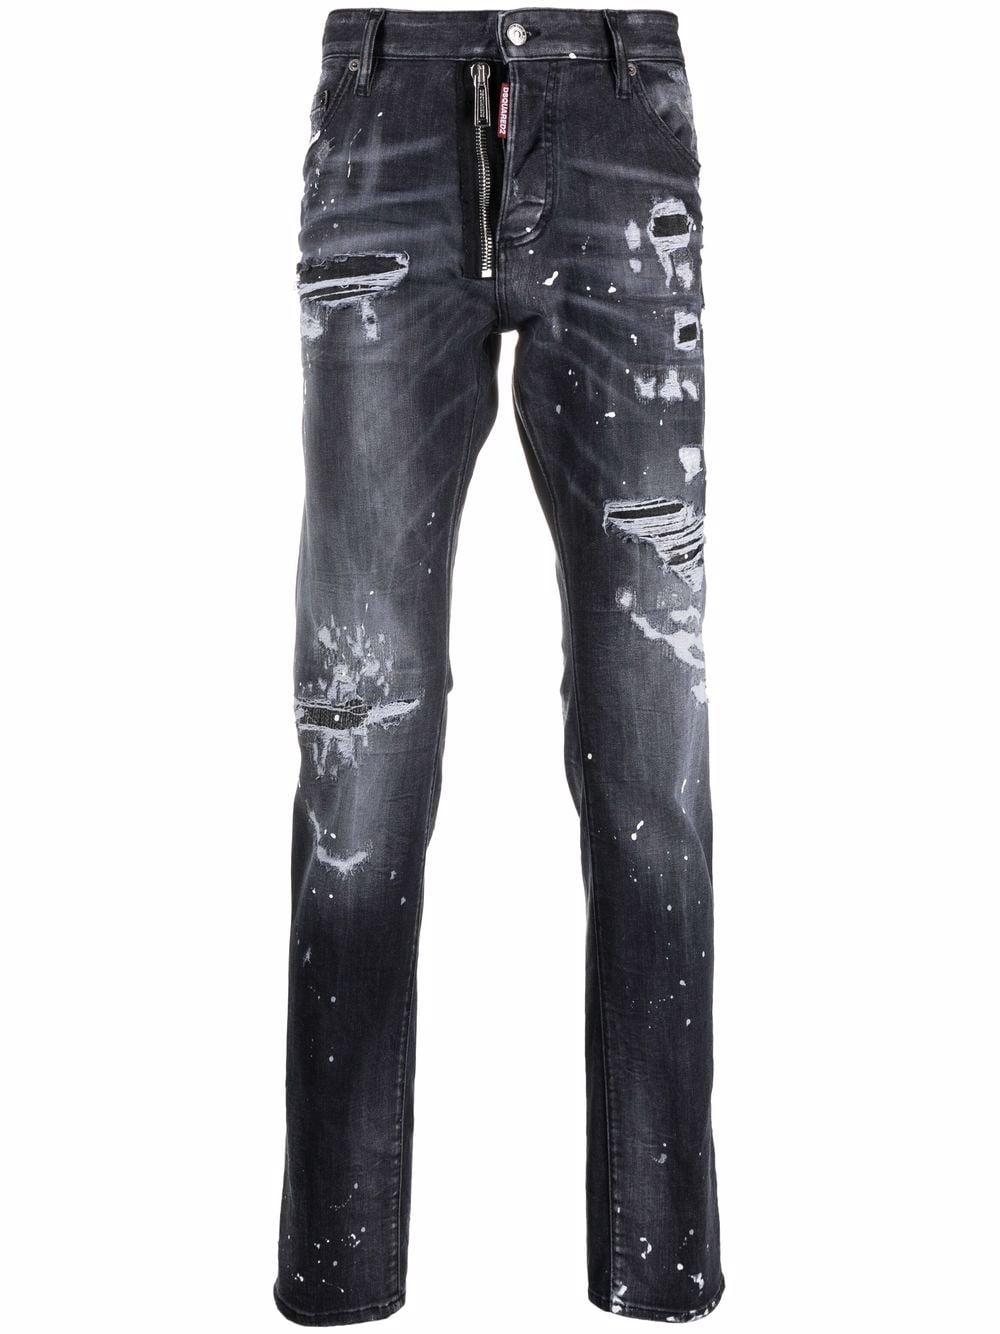 DSquared² Denim Distressed Paint-splatter Jeans in Black for Men - Lyst